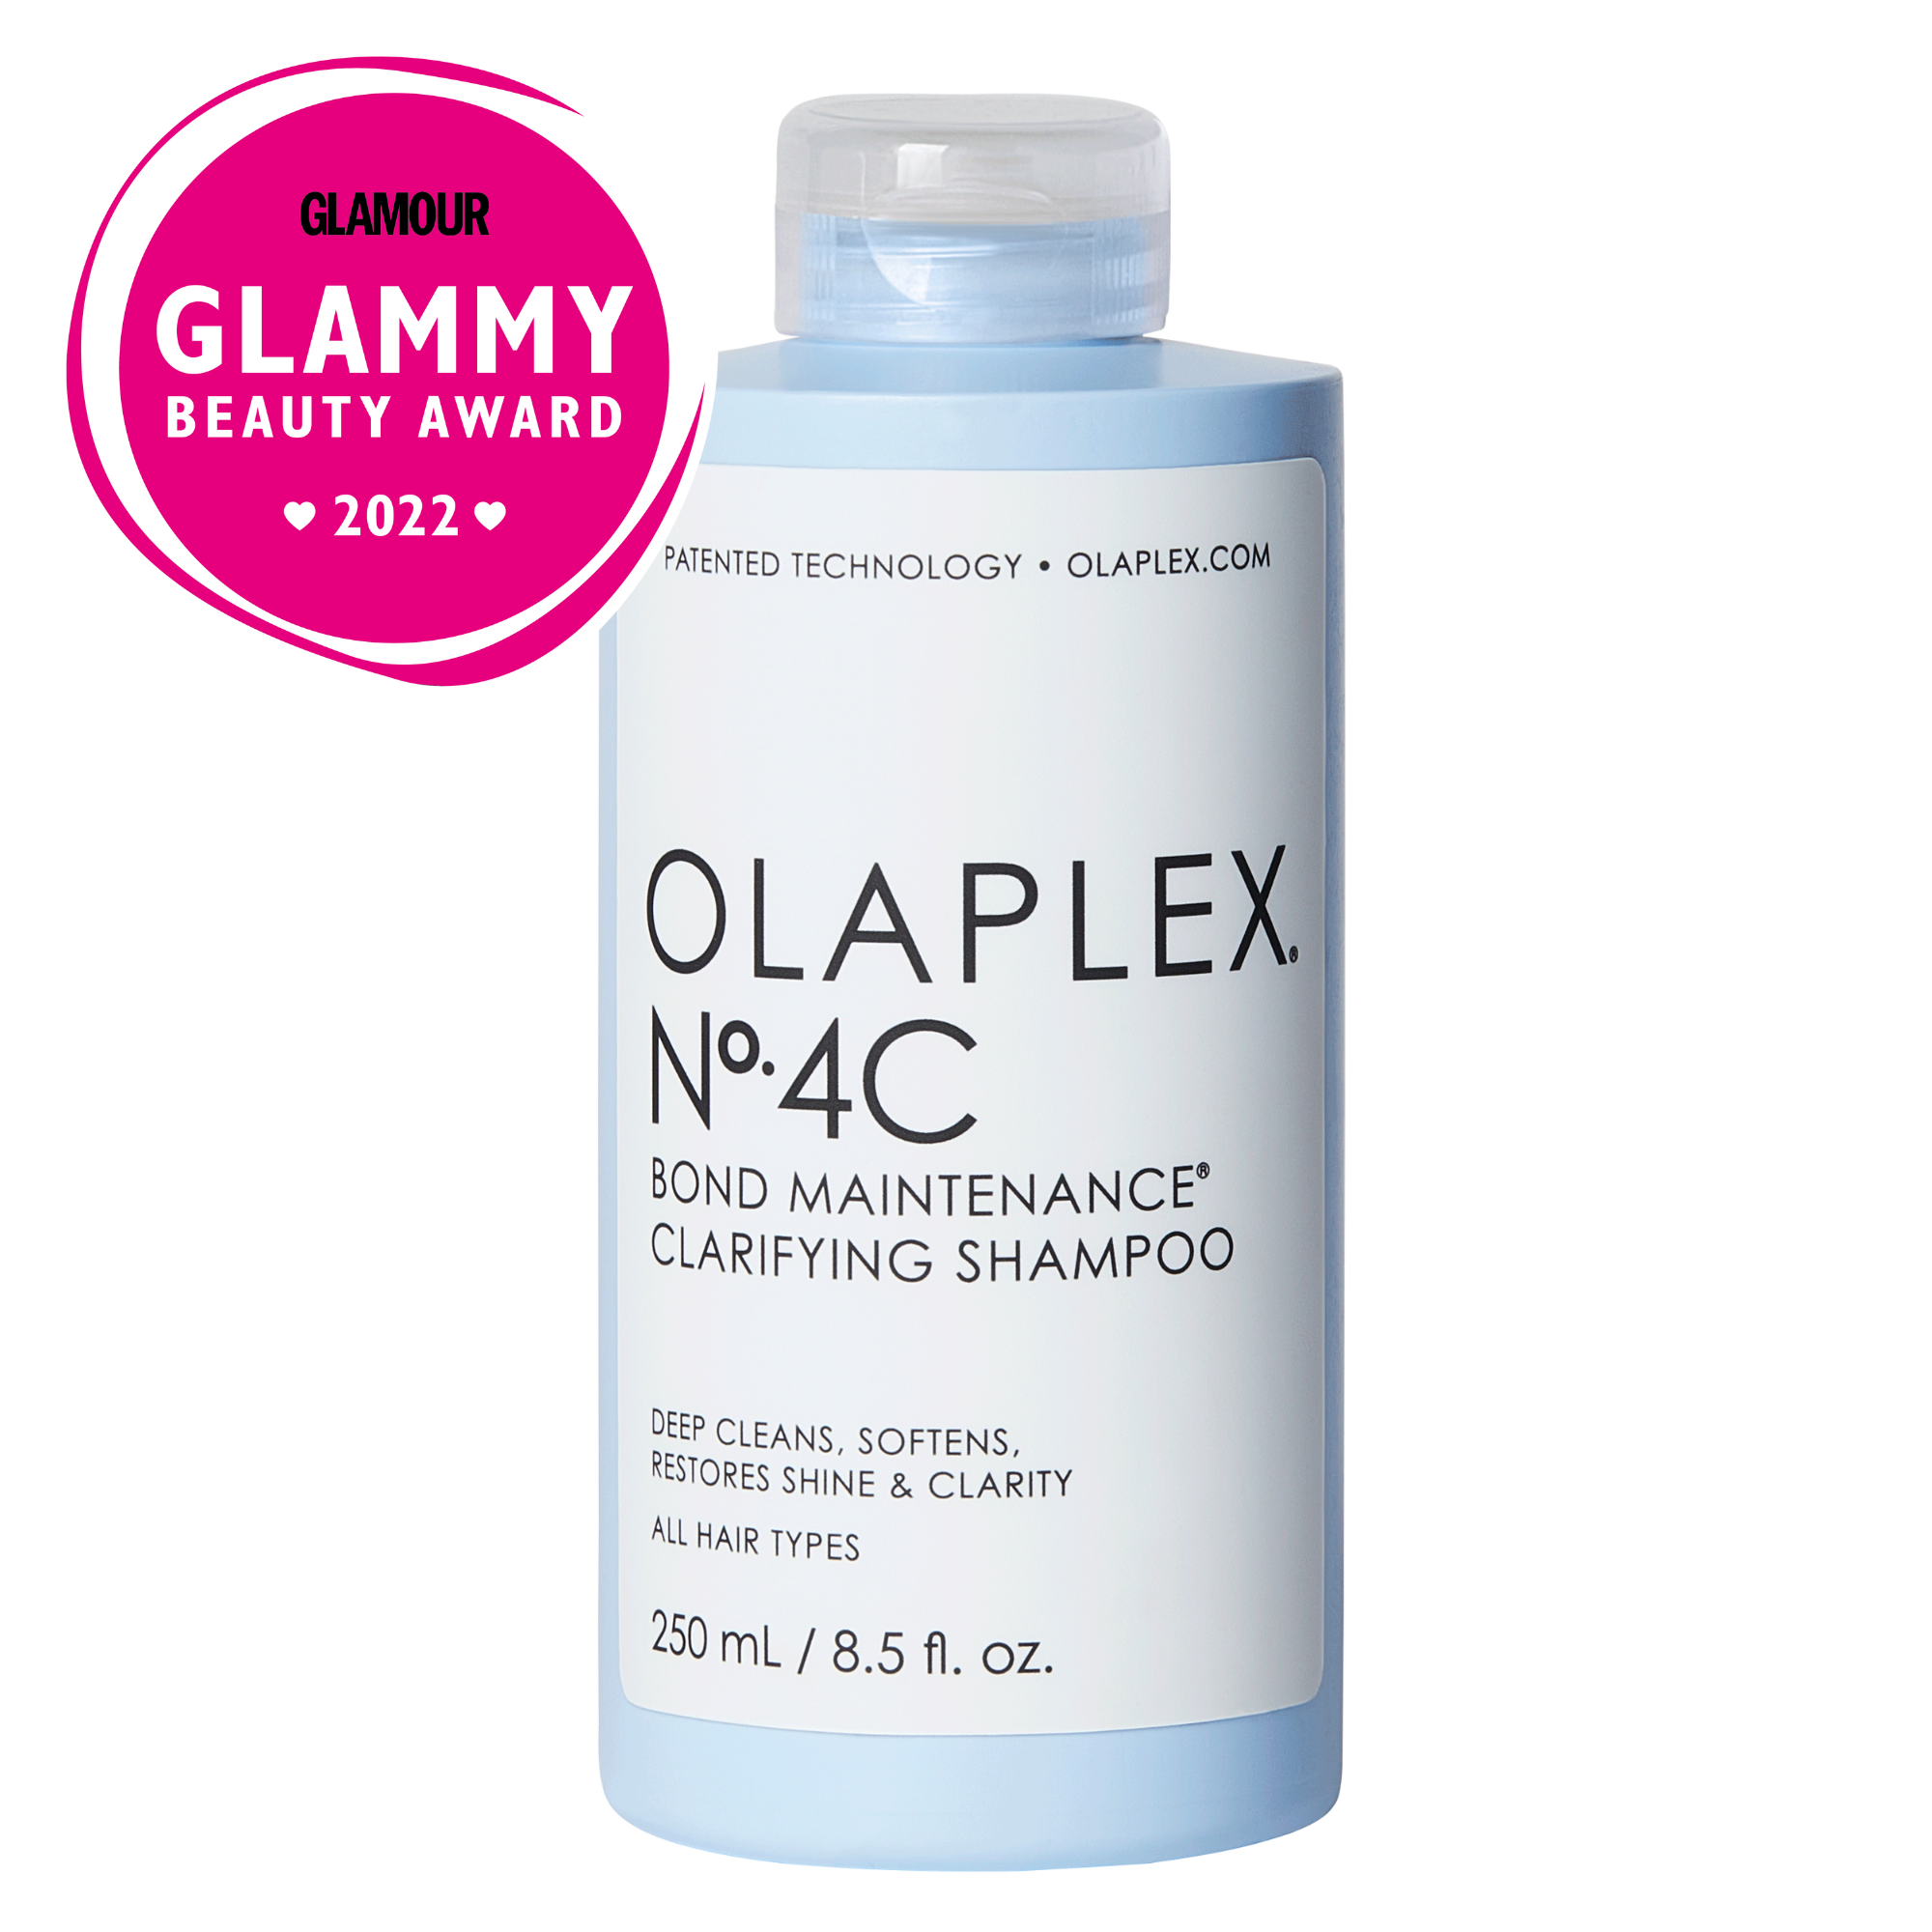 Original OLAPLEX® N°4C Clarifying Shampoo grid image